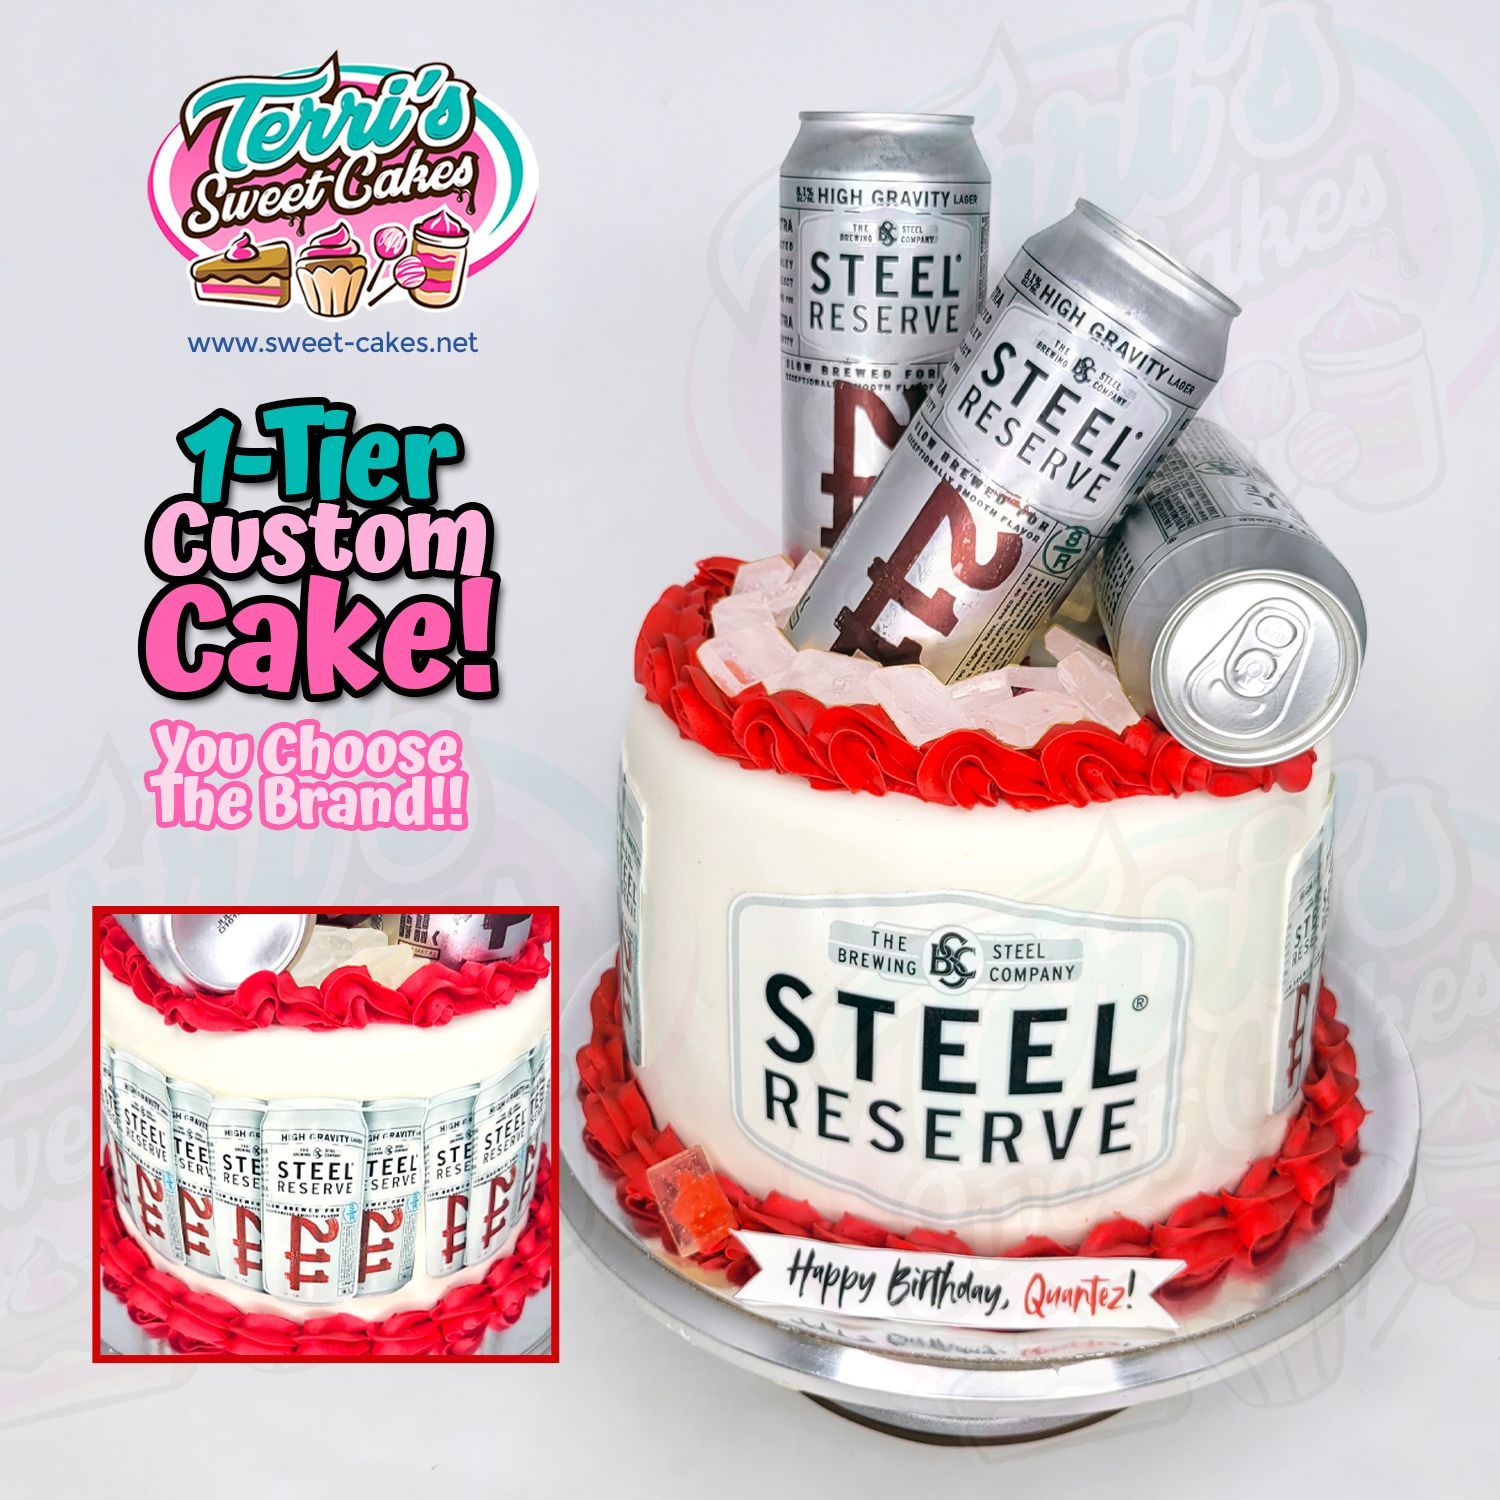 Steel Reserve 211 Birthday Cake by Terri's Sweet Cakes!